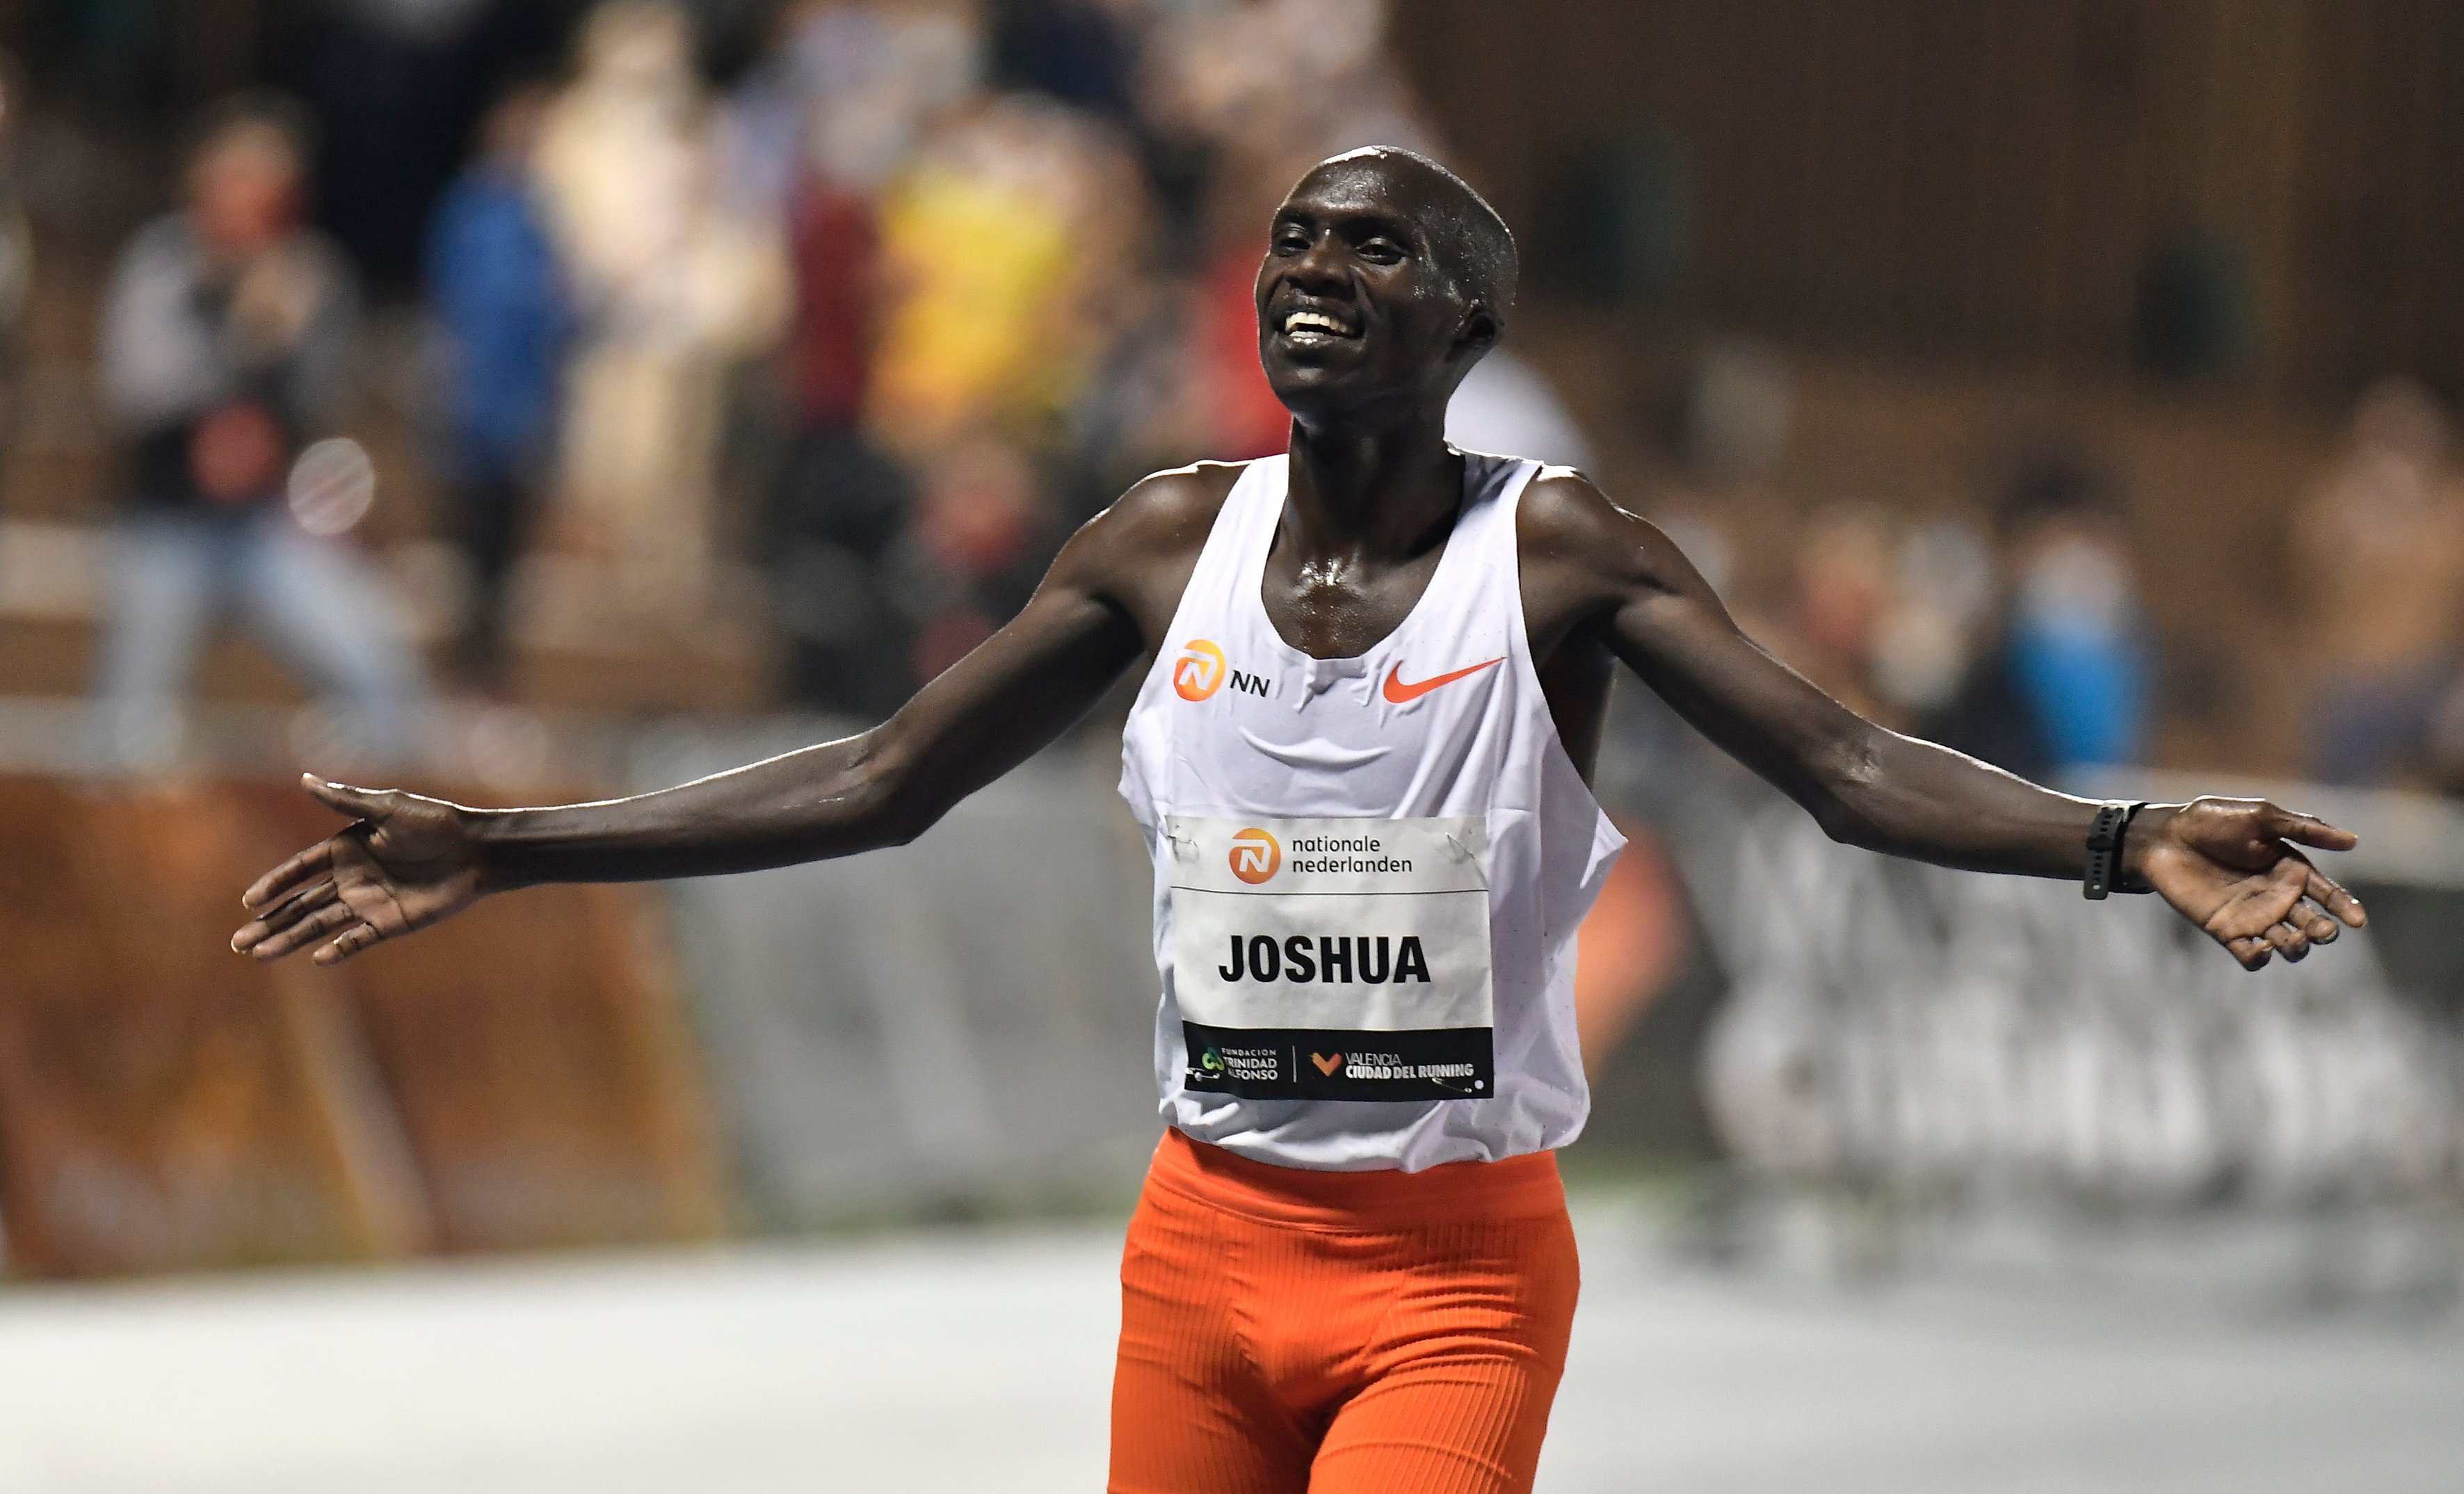 Uganda’s Joshua Cheptegei smashes 10,000m track world record